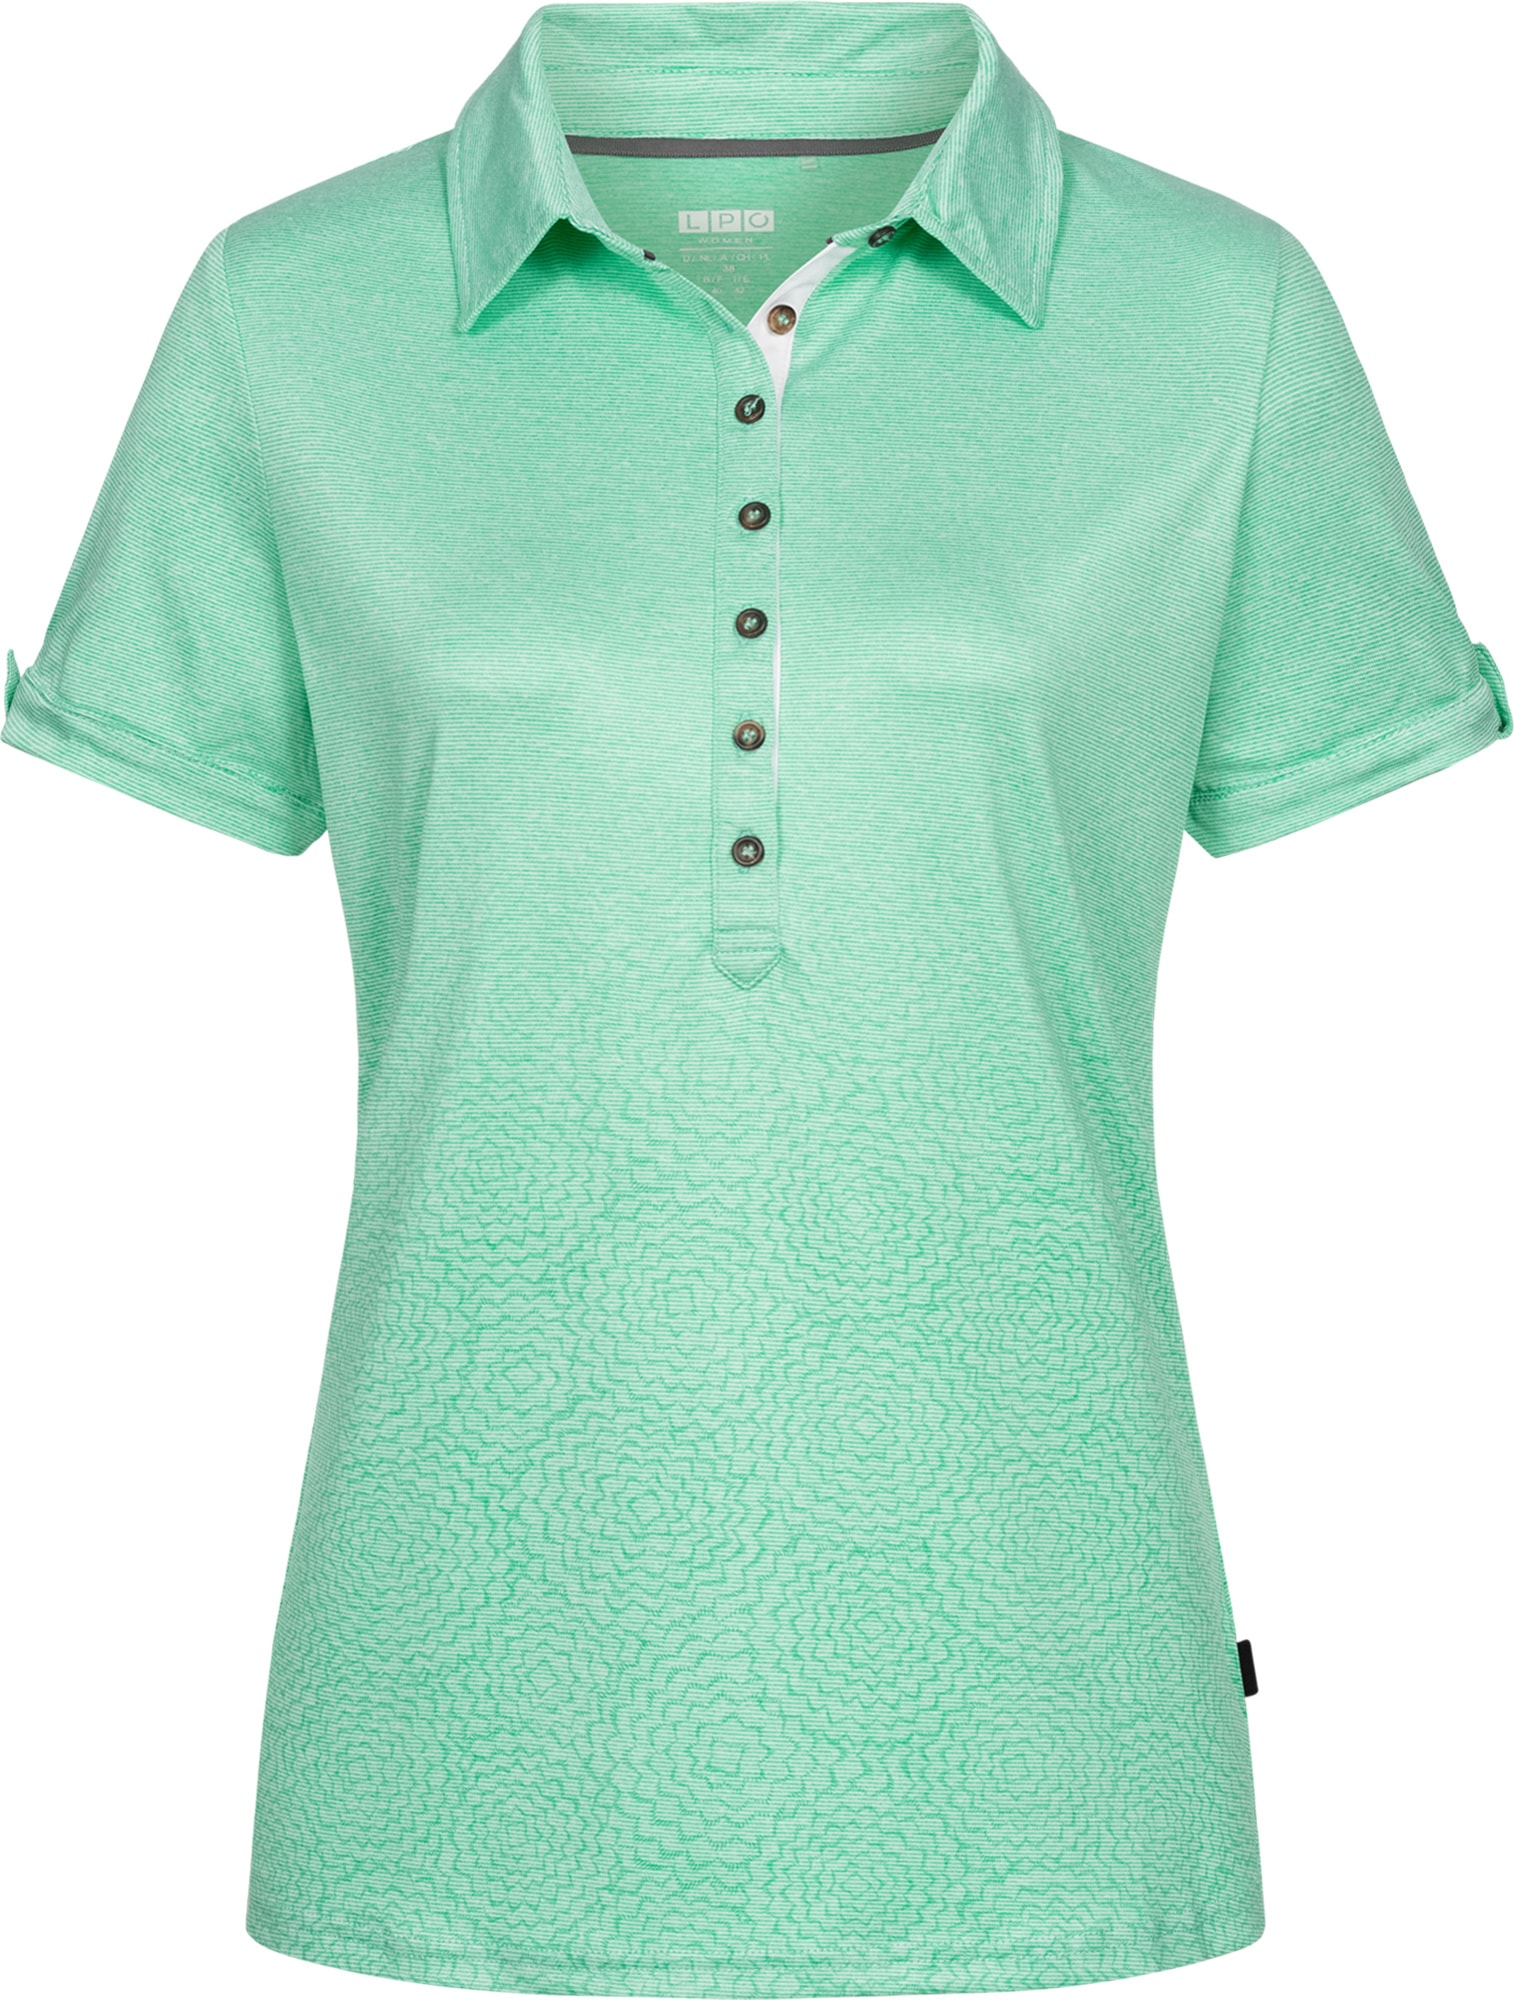 LPO Poloshirt »HEDLEY III NEW WOMEN«, Funktionspolo mit nachhaltig  recyceltem Polyester versandkostenfrei kaufen | Poloshirts